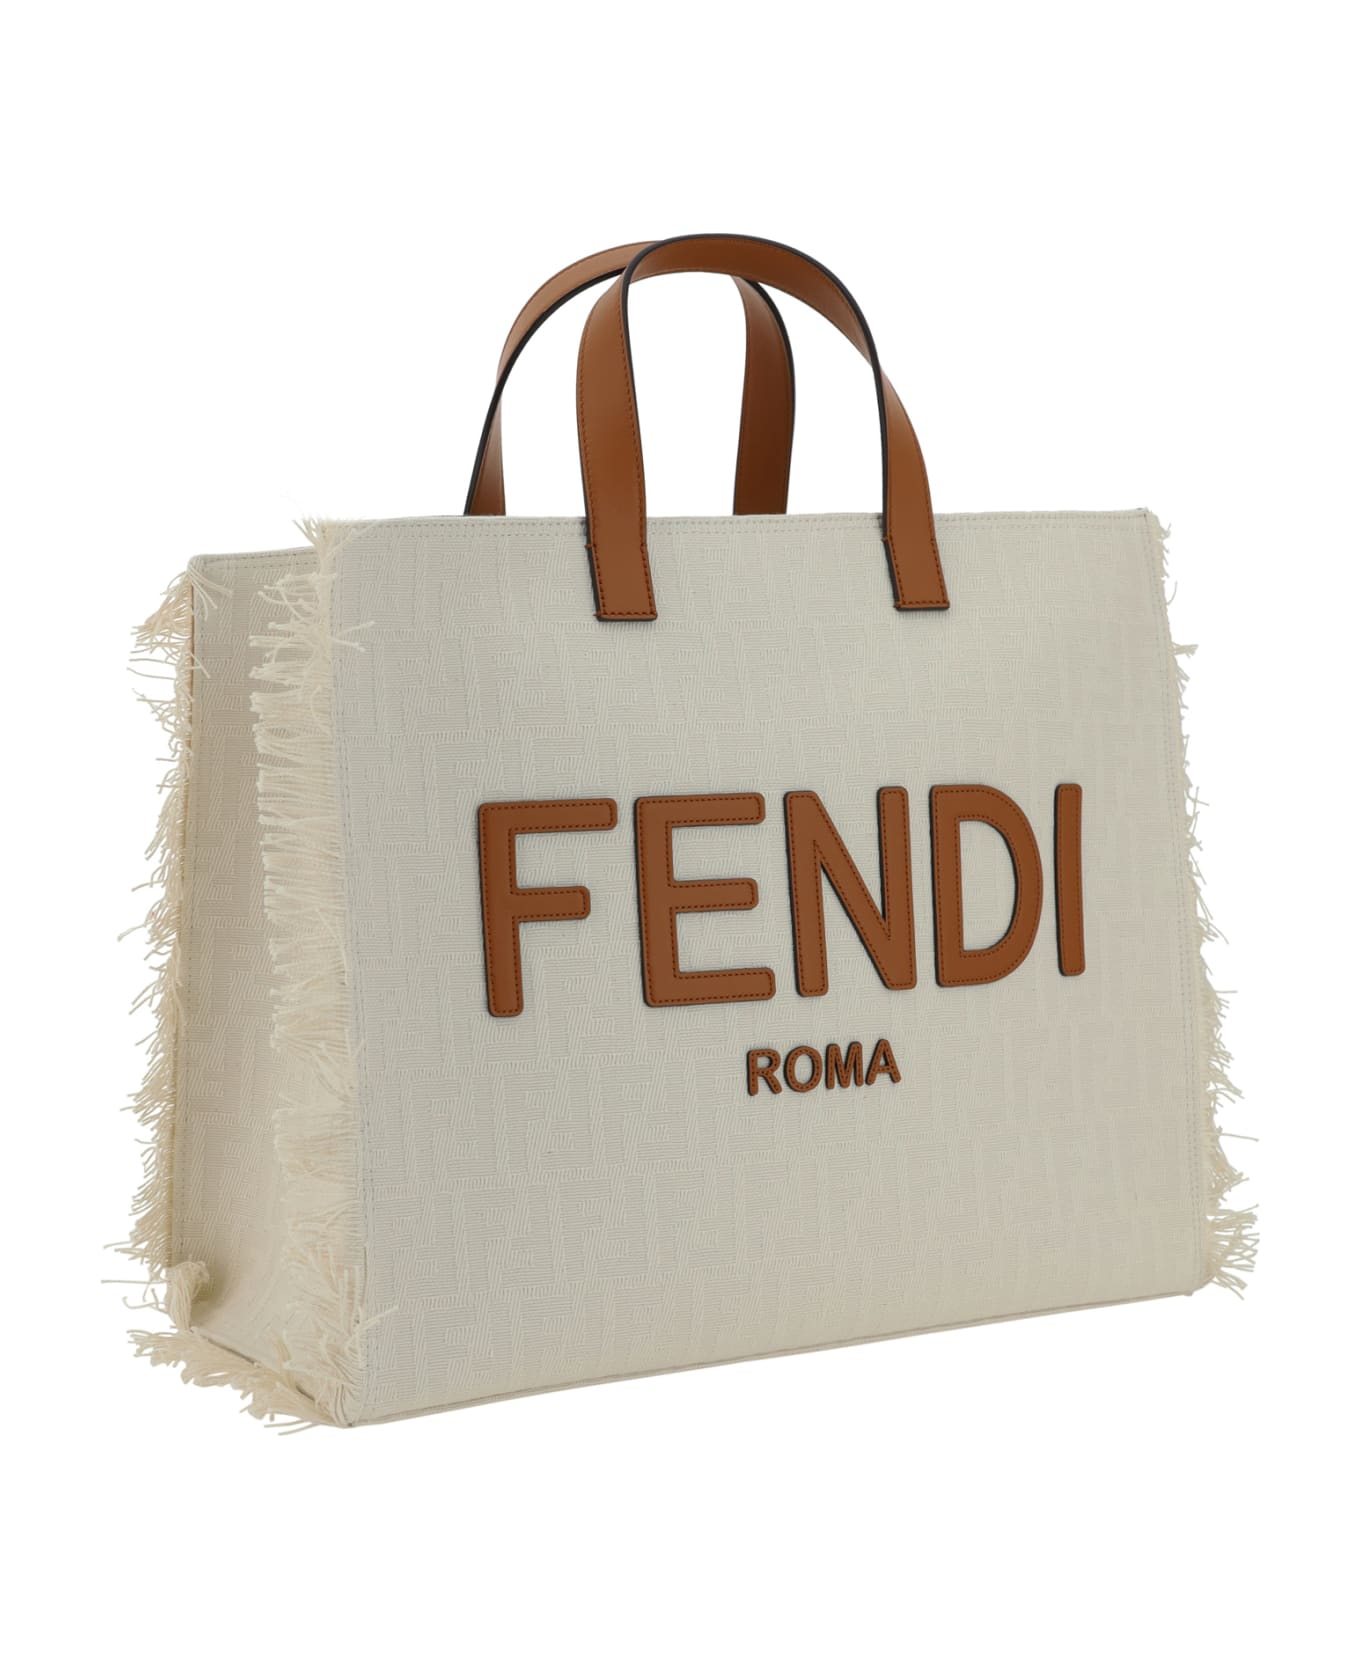 Fendi Shopping Bag - Grezzo+brandy+pall